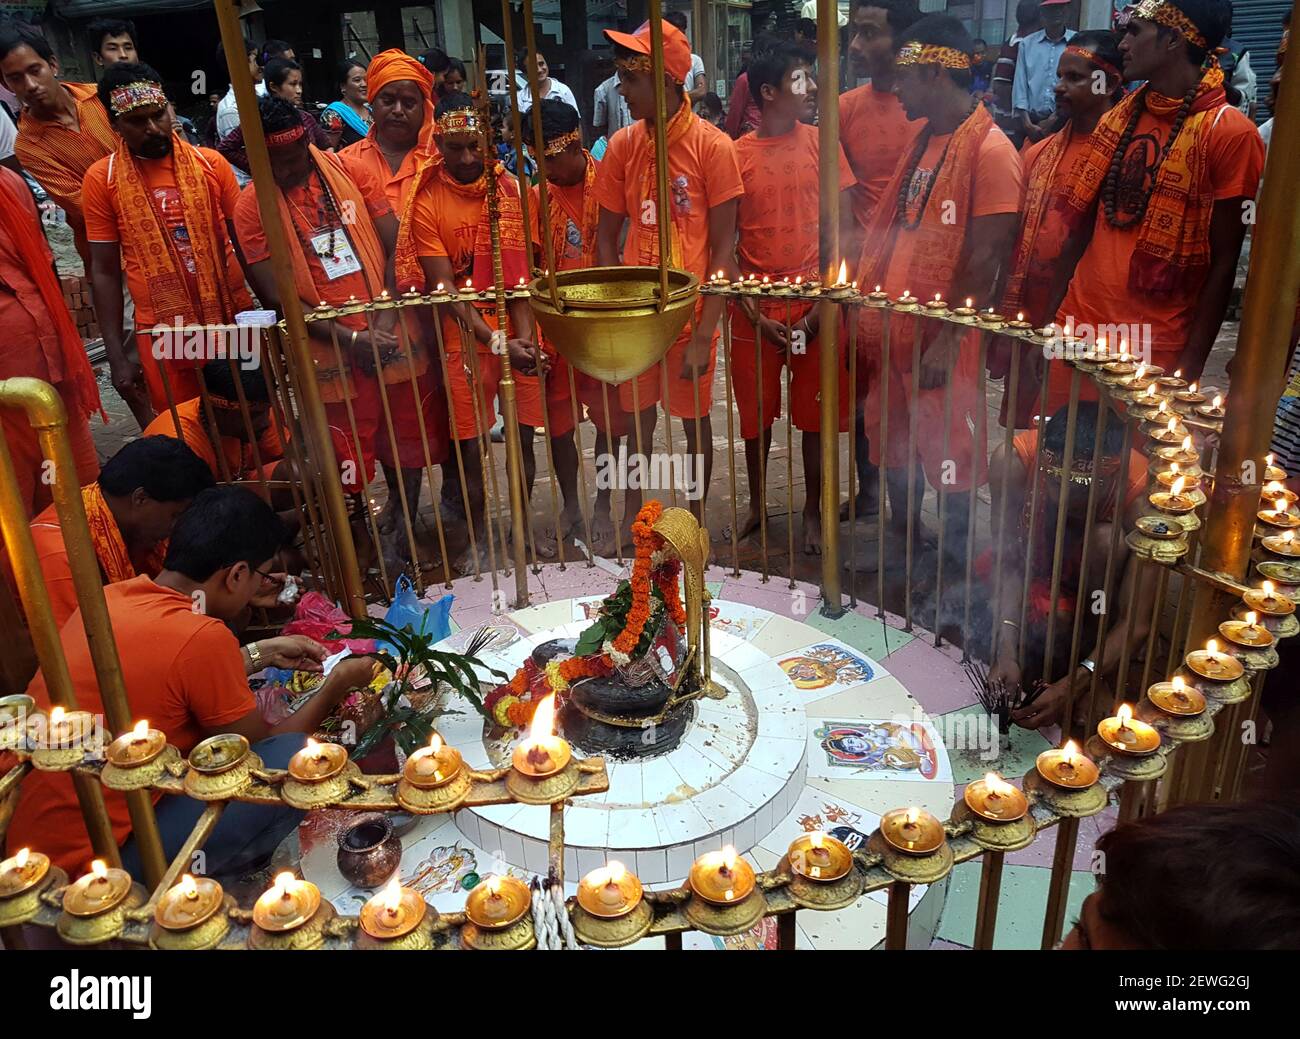 160801) -- KATHMANDU, Aug. 1, 2016 (Xinhua) -- Hindu devotees offer prayers  during the Bol Bom pilgrimage at Sudarijal, Kathmandu, Nepal, Aug. 1, 2016.  During this pilgrimage, devotees walk miles barefooted before